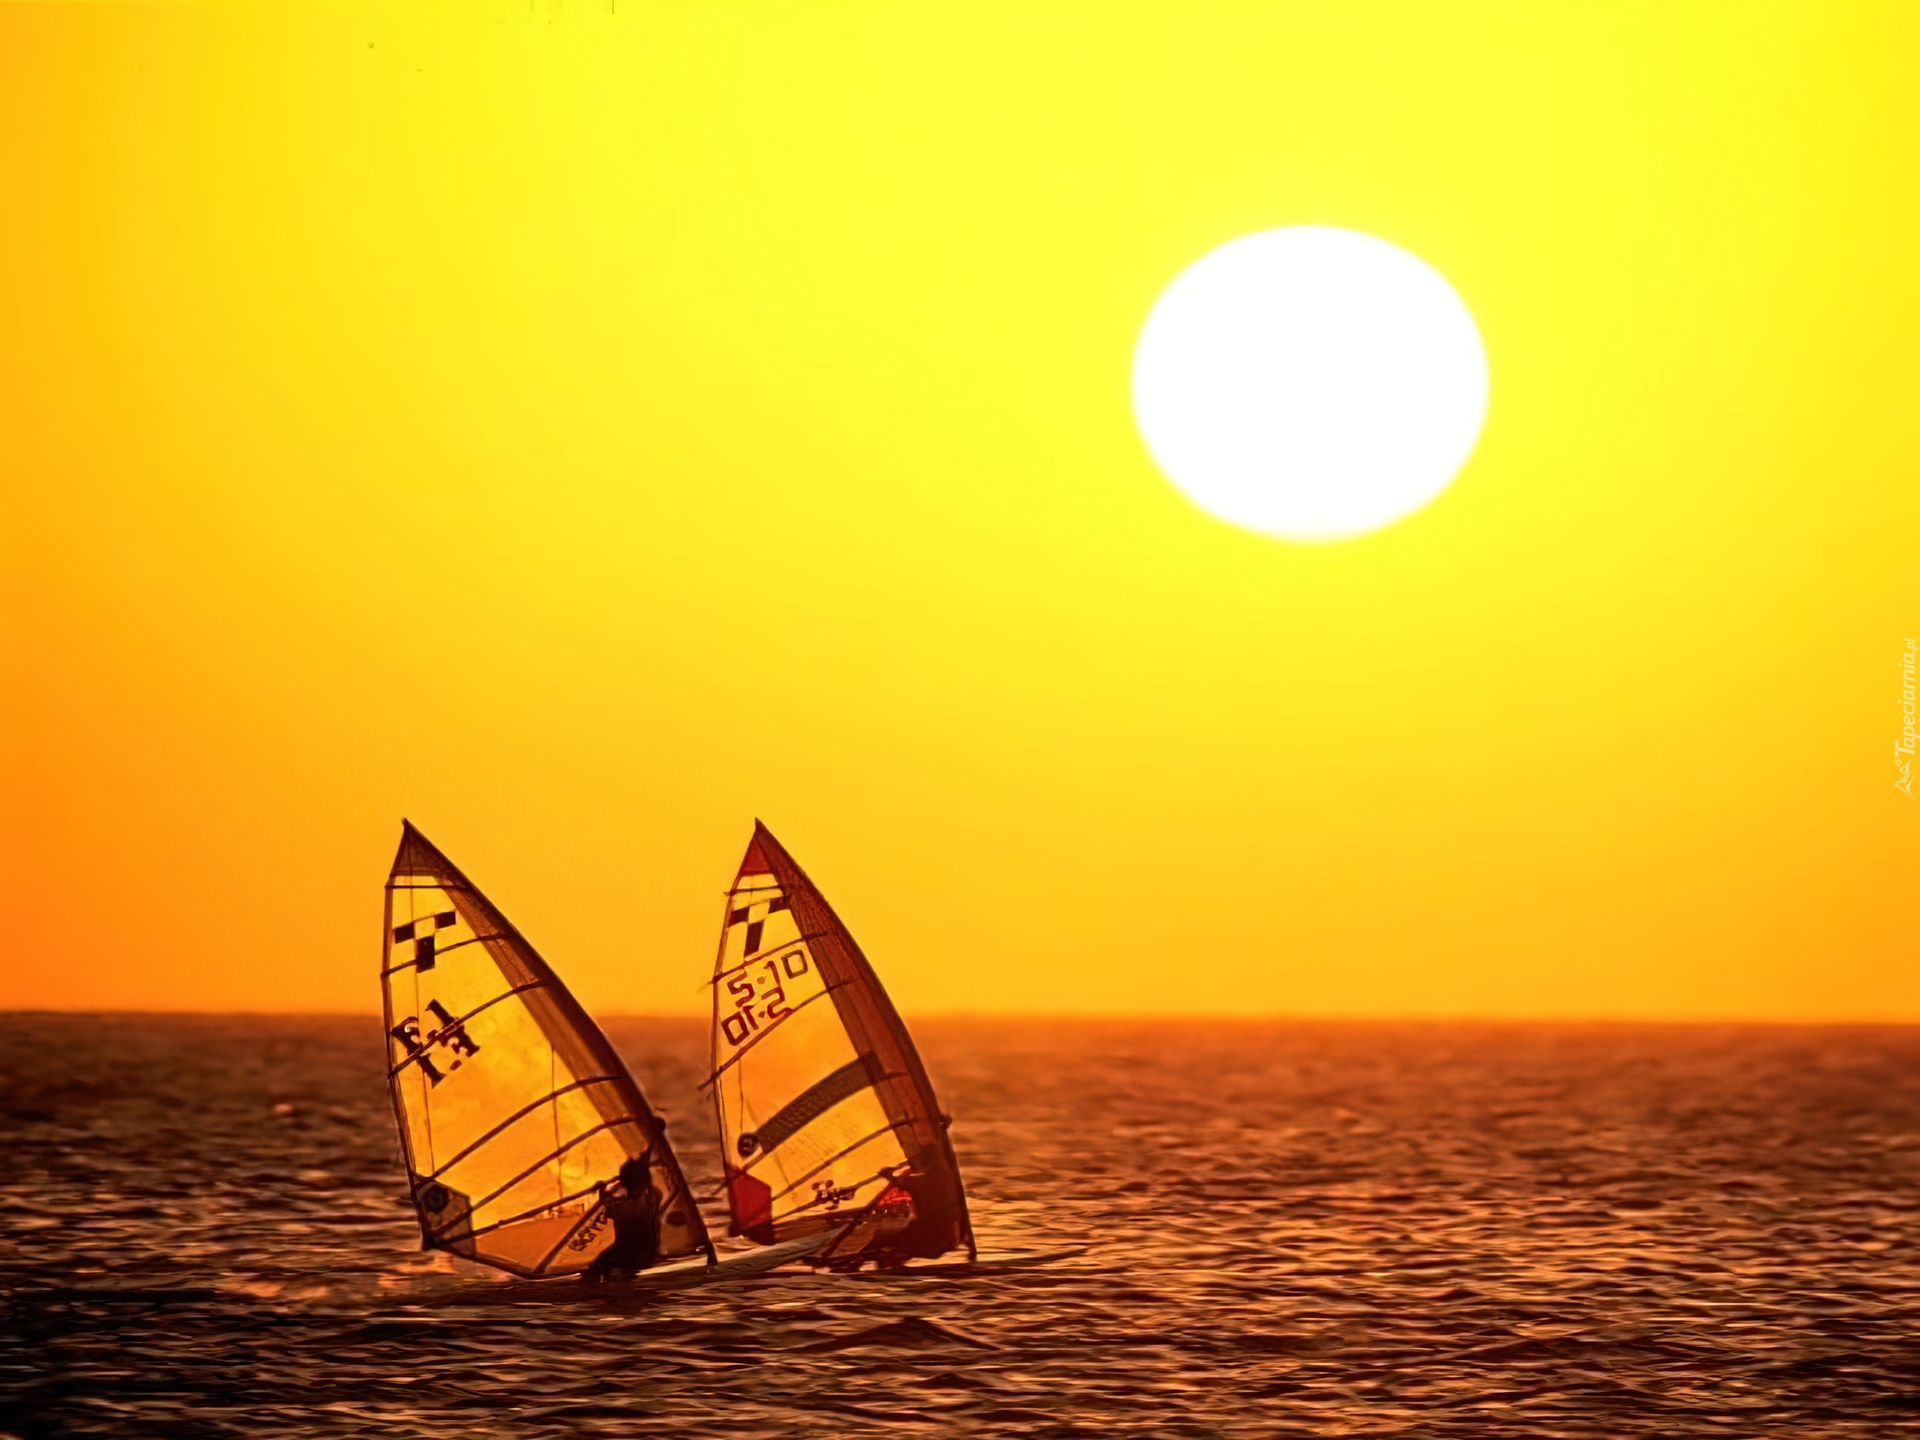 Zachód, Słońca, Windsurfing